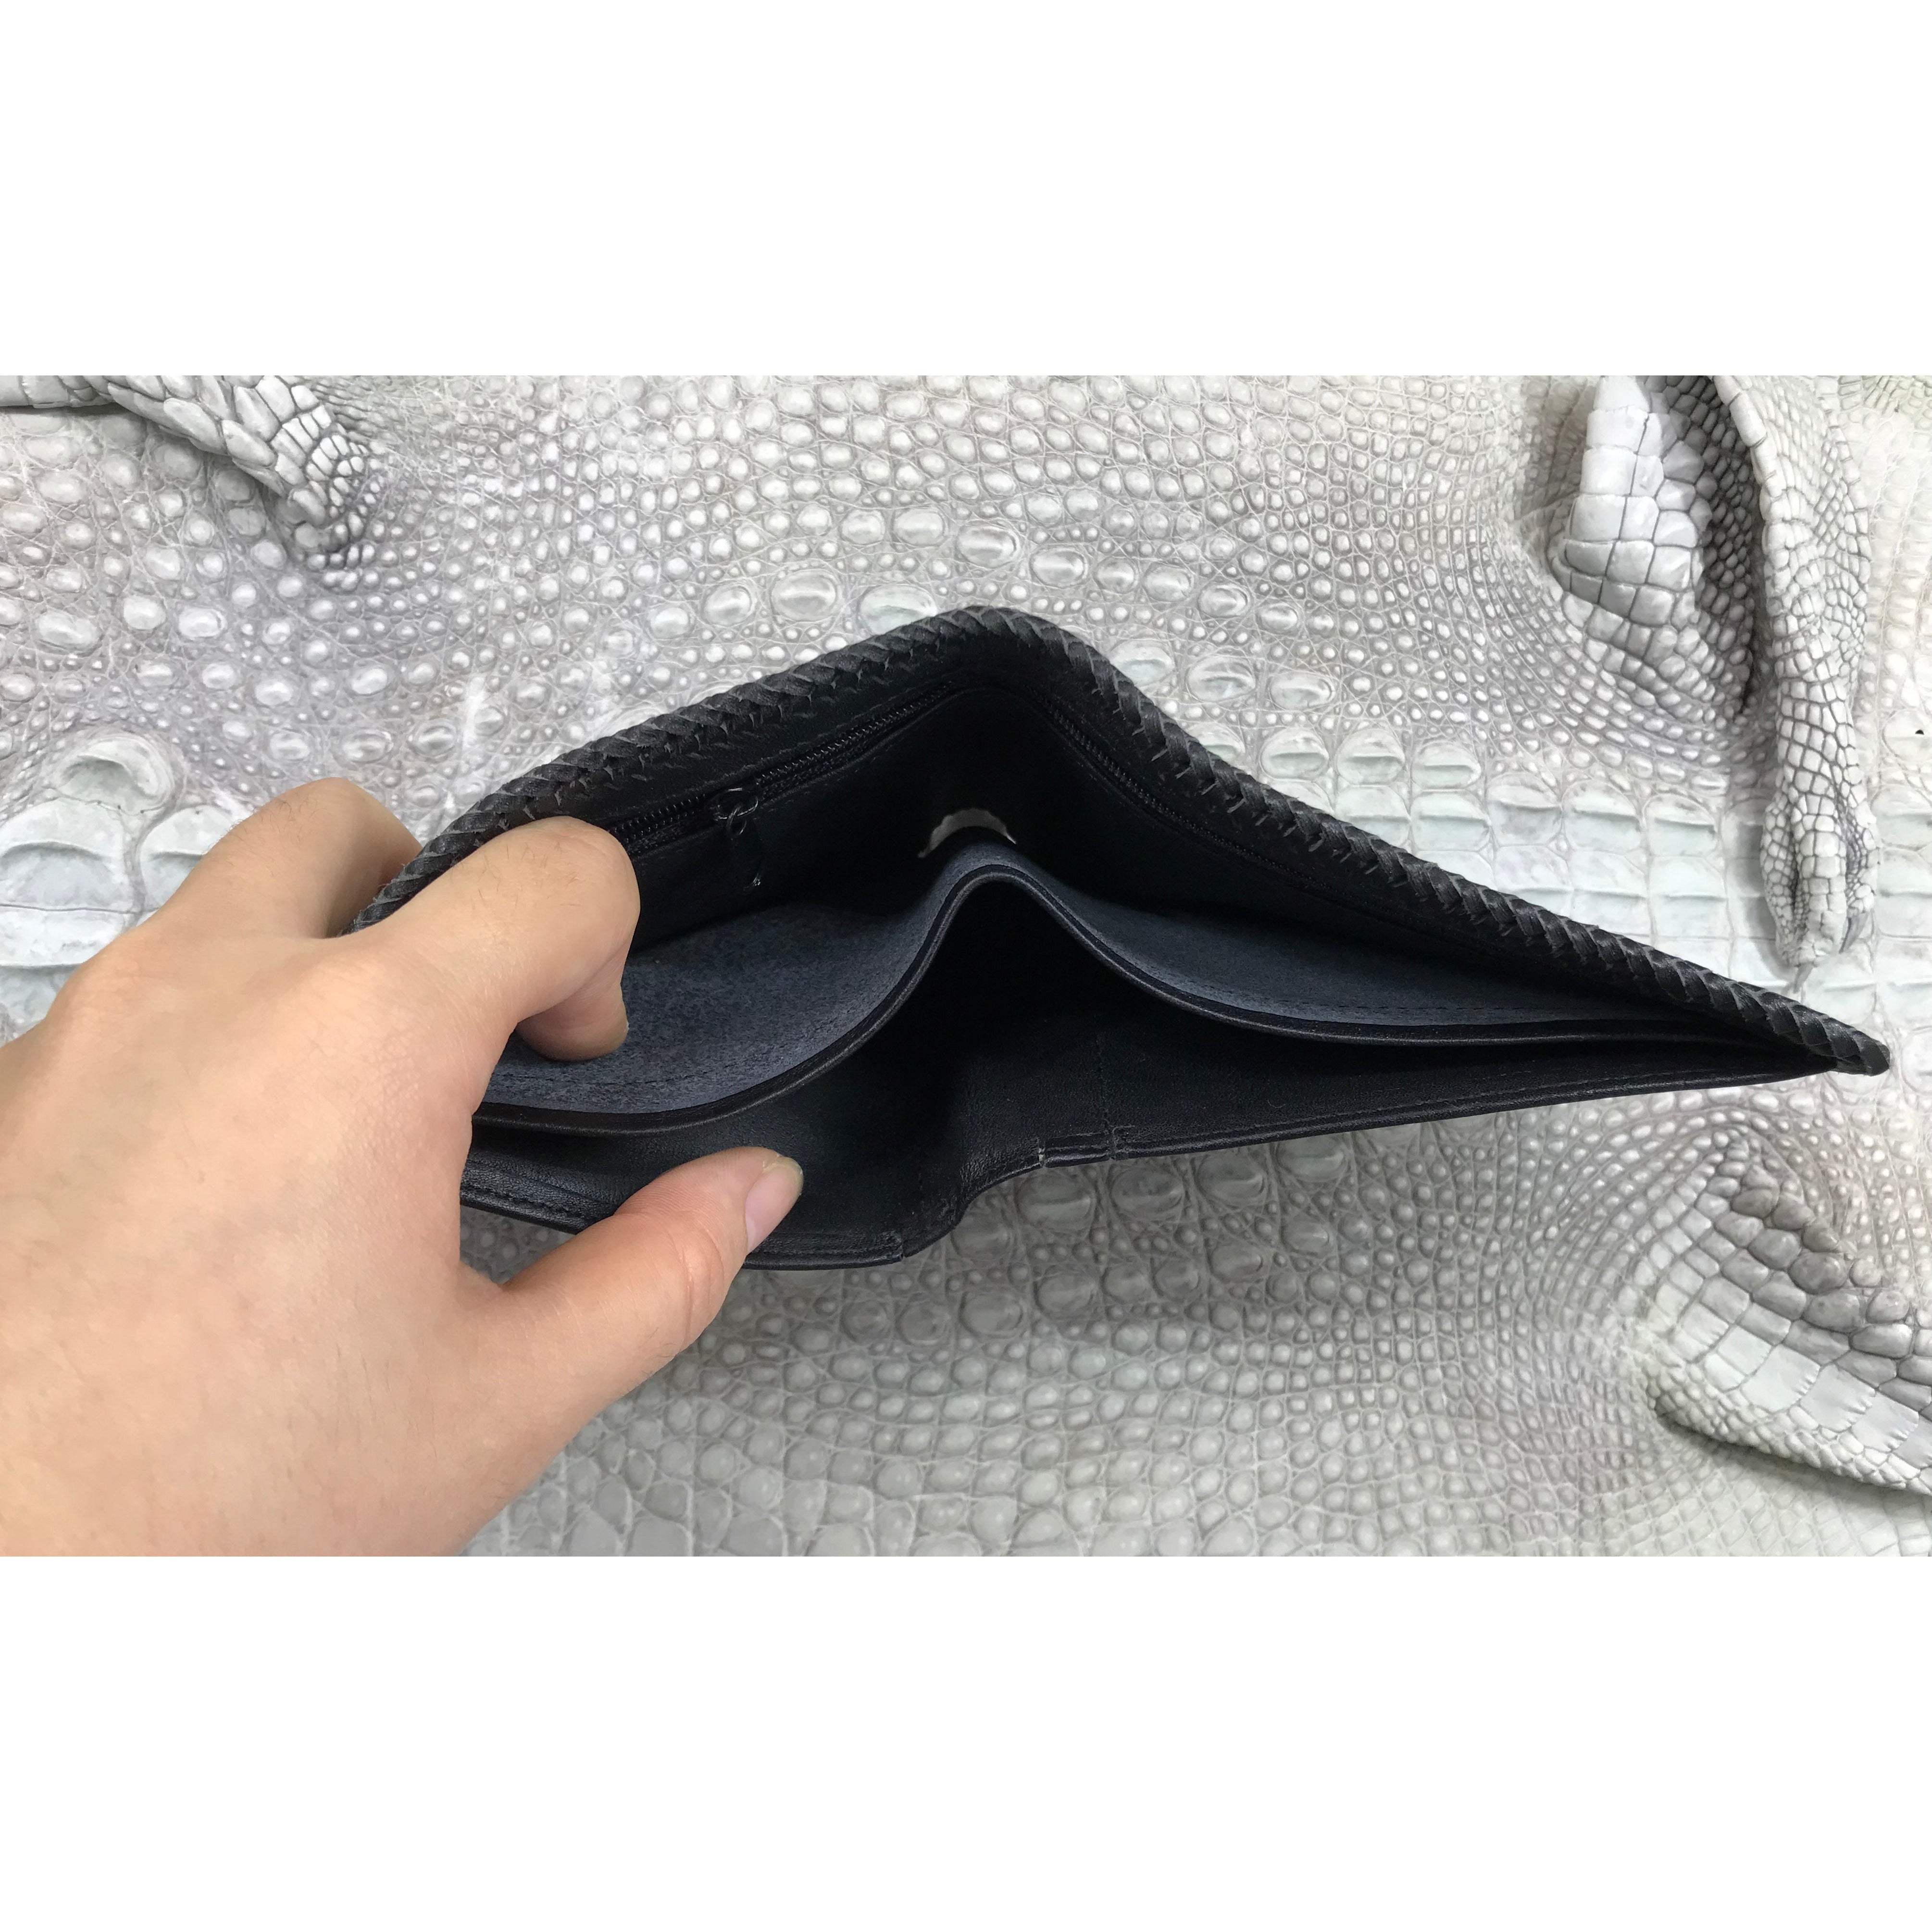 Black Alligator Skin Bifold Wallet For Men | Handmade Crocodile Leather Wallet RFID Blocking | VL5663 - Vinacreations